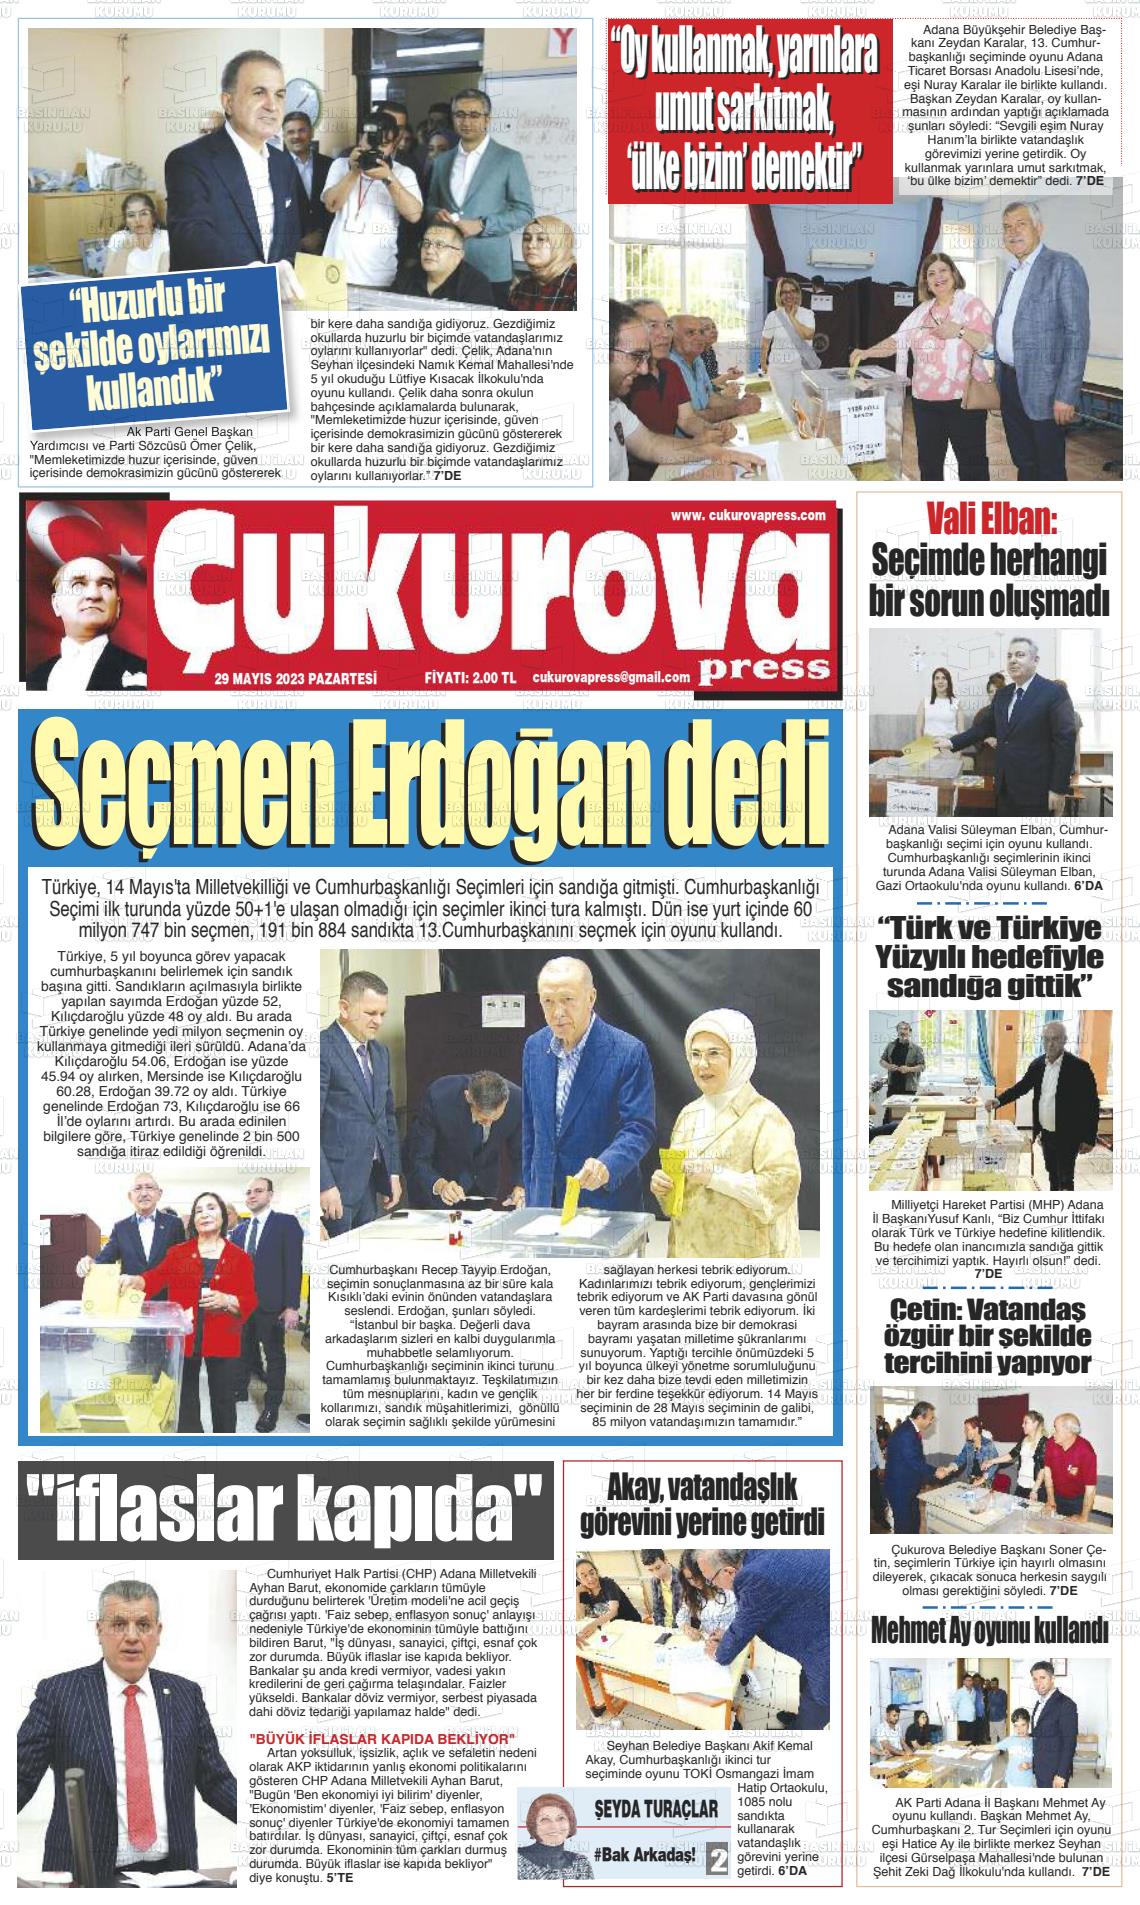 29 Mayıs 2023 Çukurova Press Gazete Manşeti